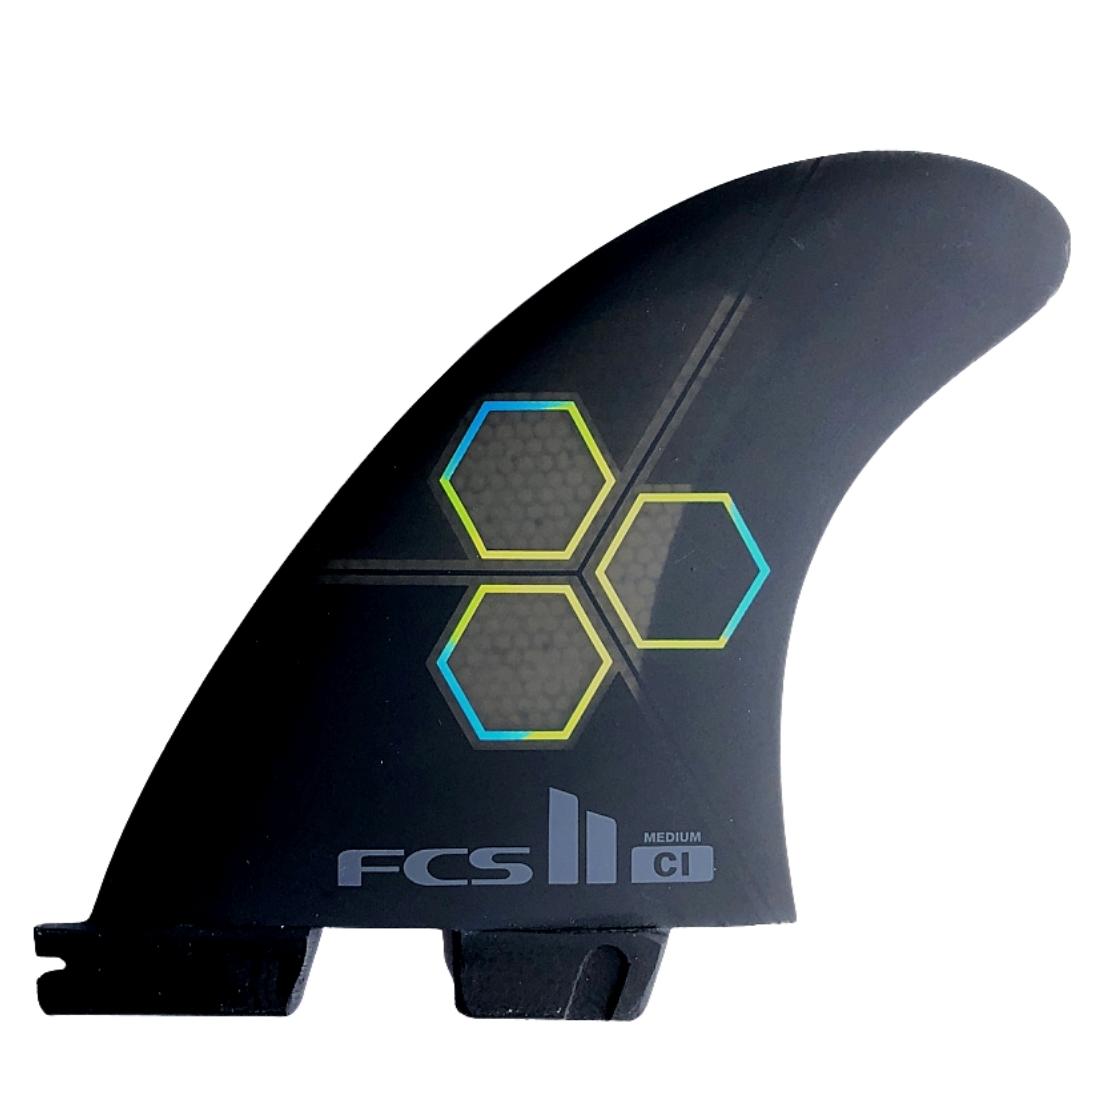 FCS II CI PC Medium Thruster Surfboard Fins - Black - FCS II Fins by FCS Medium Fins